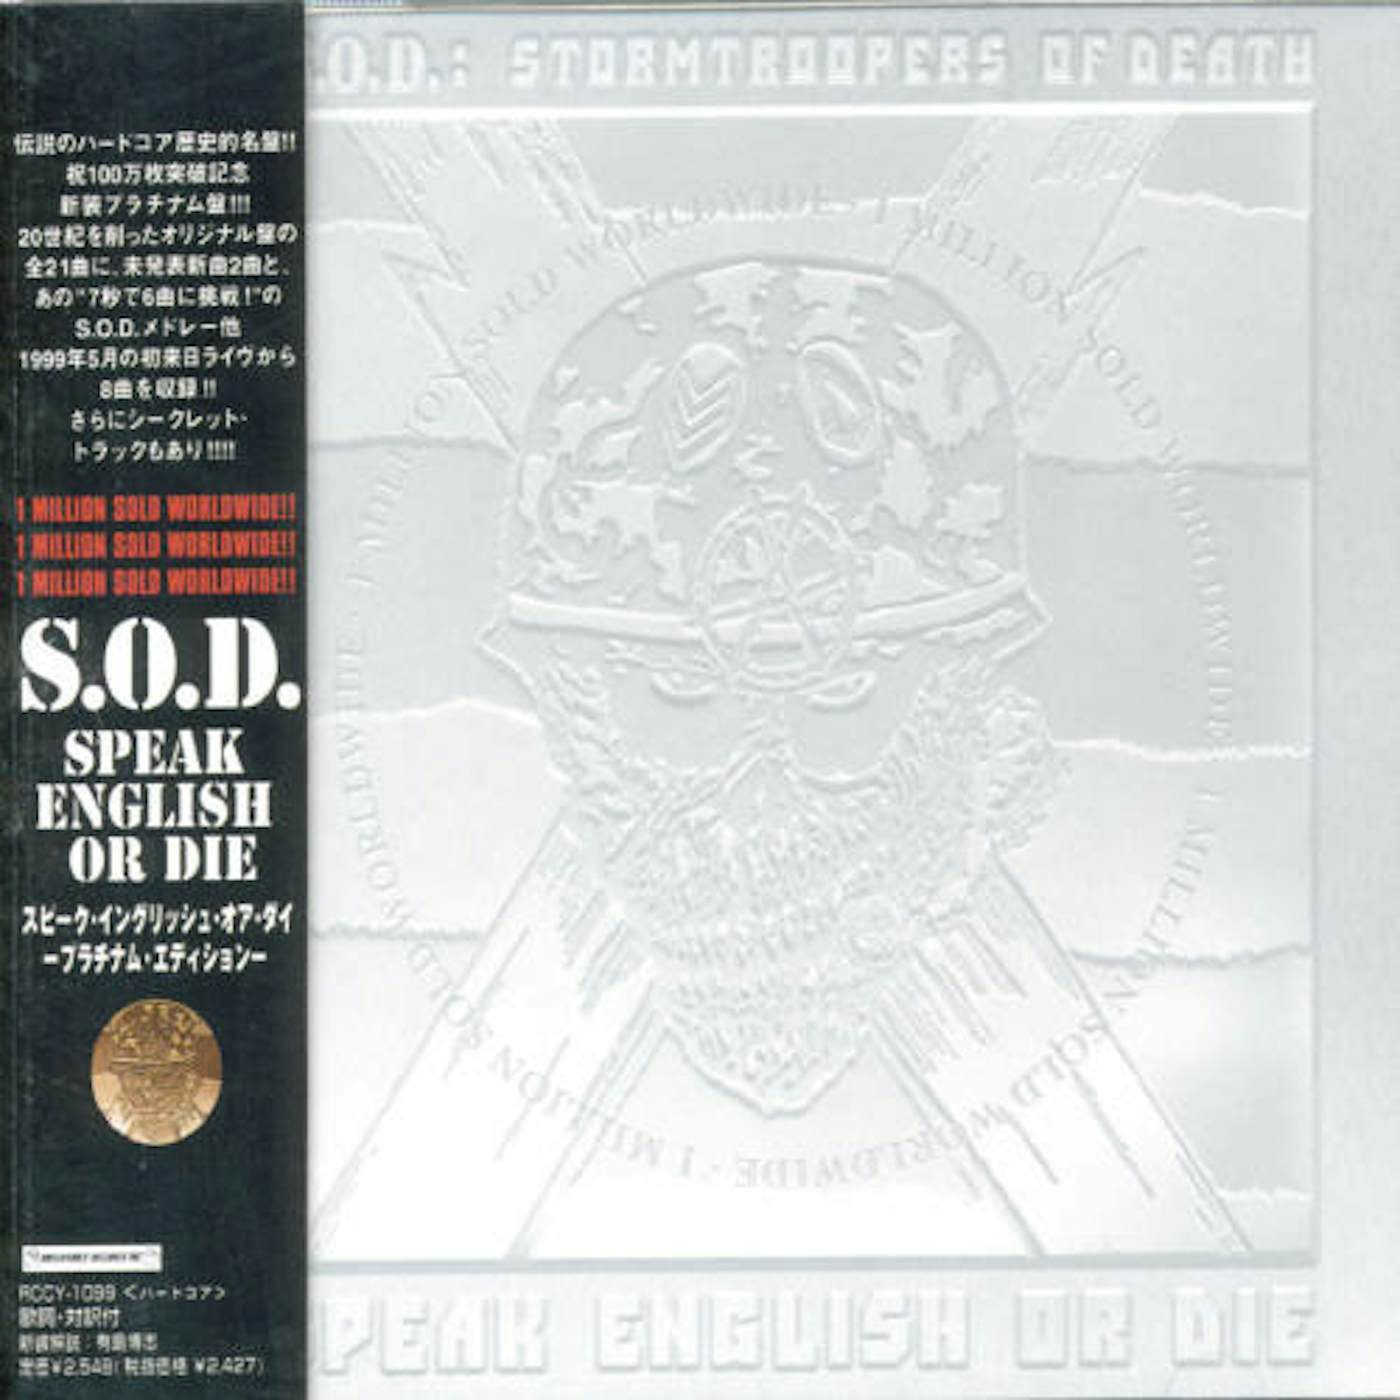 S.O.D. SPEAK ENGLISH DIE CD